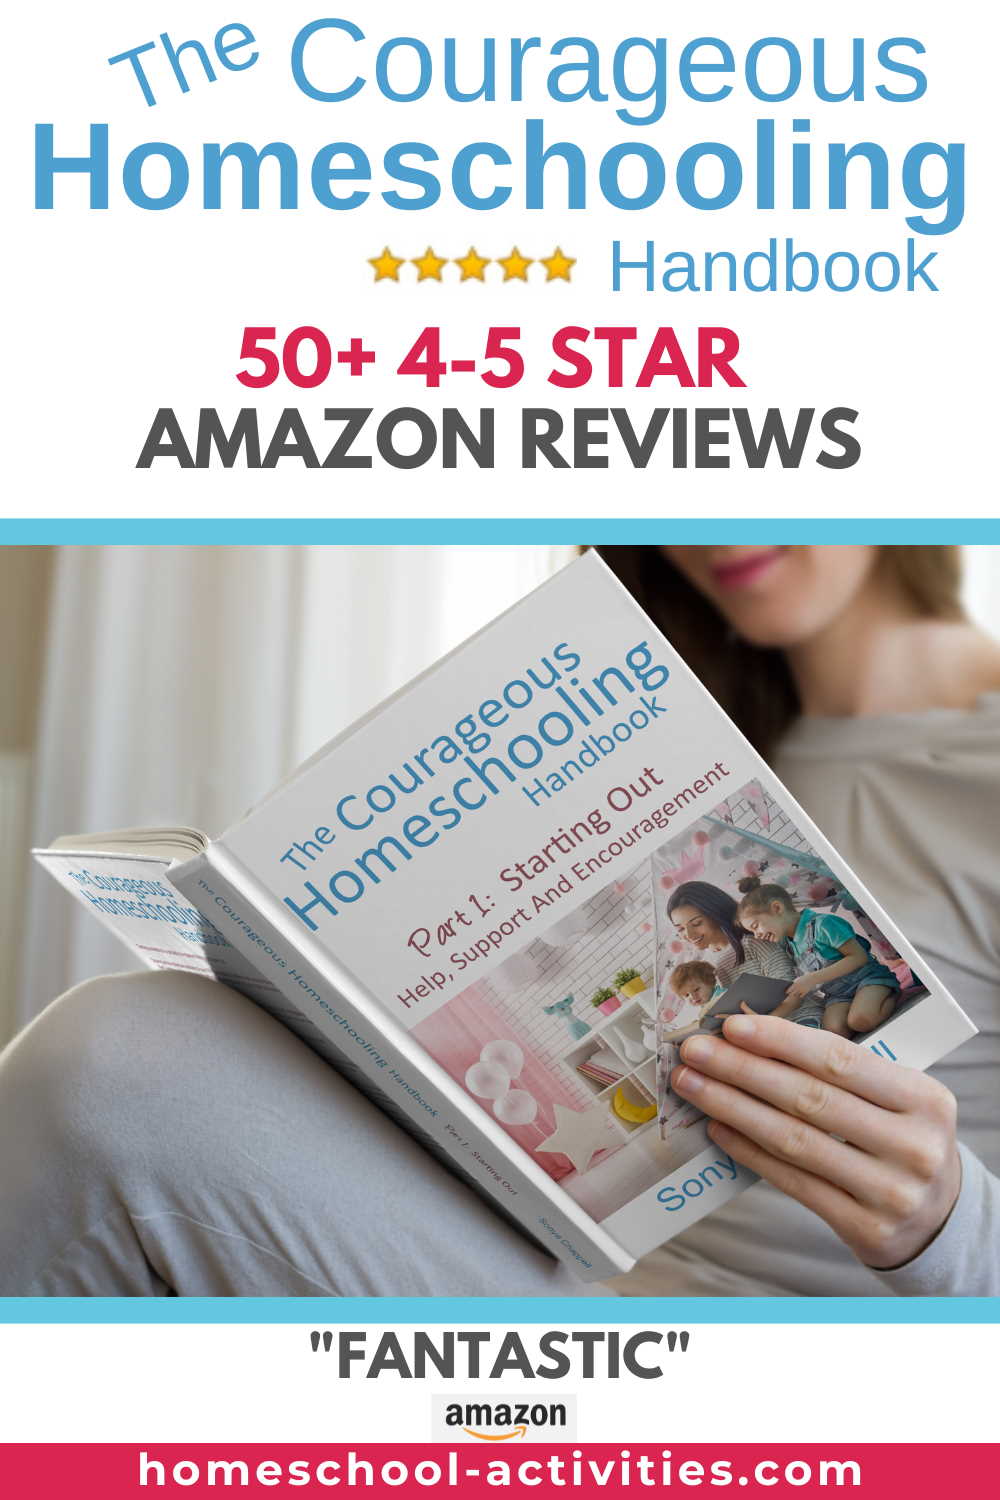 The Courageous Homeschooling Handbook helping homeschoolers starting out